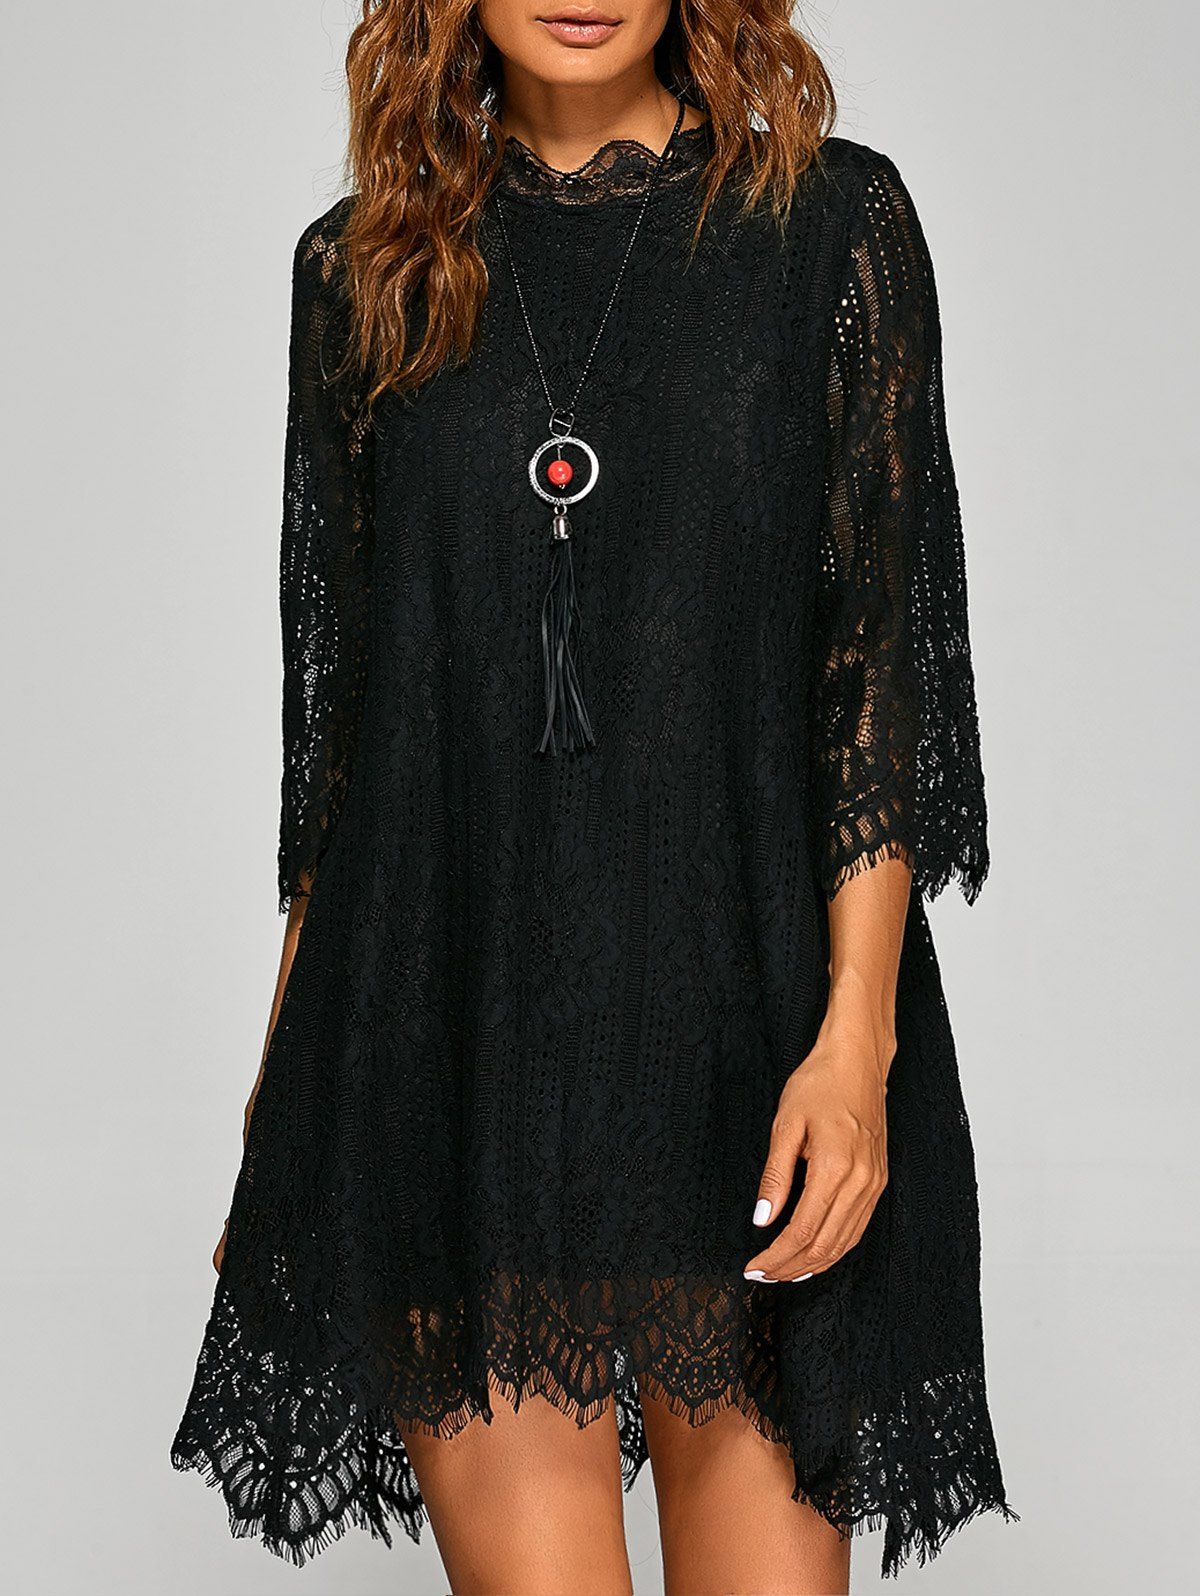 Loose Irregular Hem Openwork Lace Dress With Sleeves - BLACK M